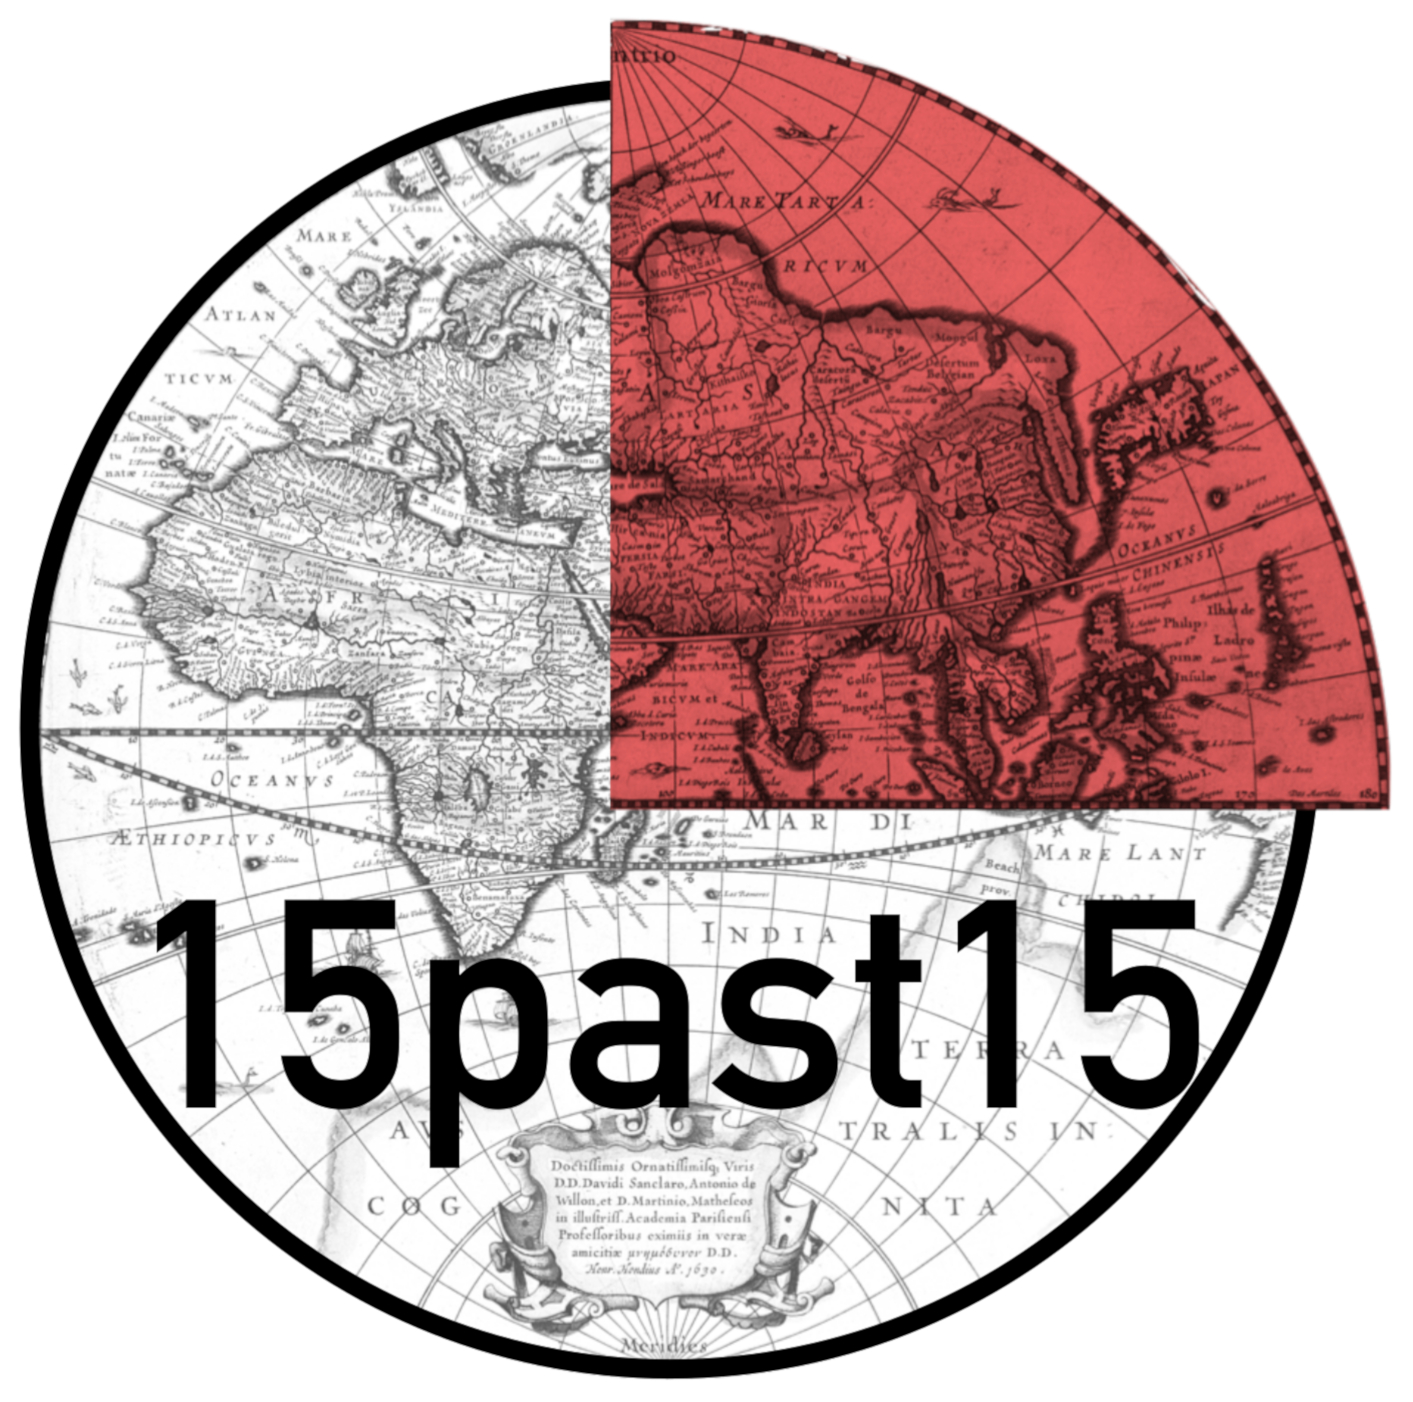 Logo 15past15